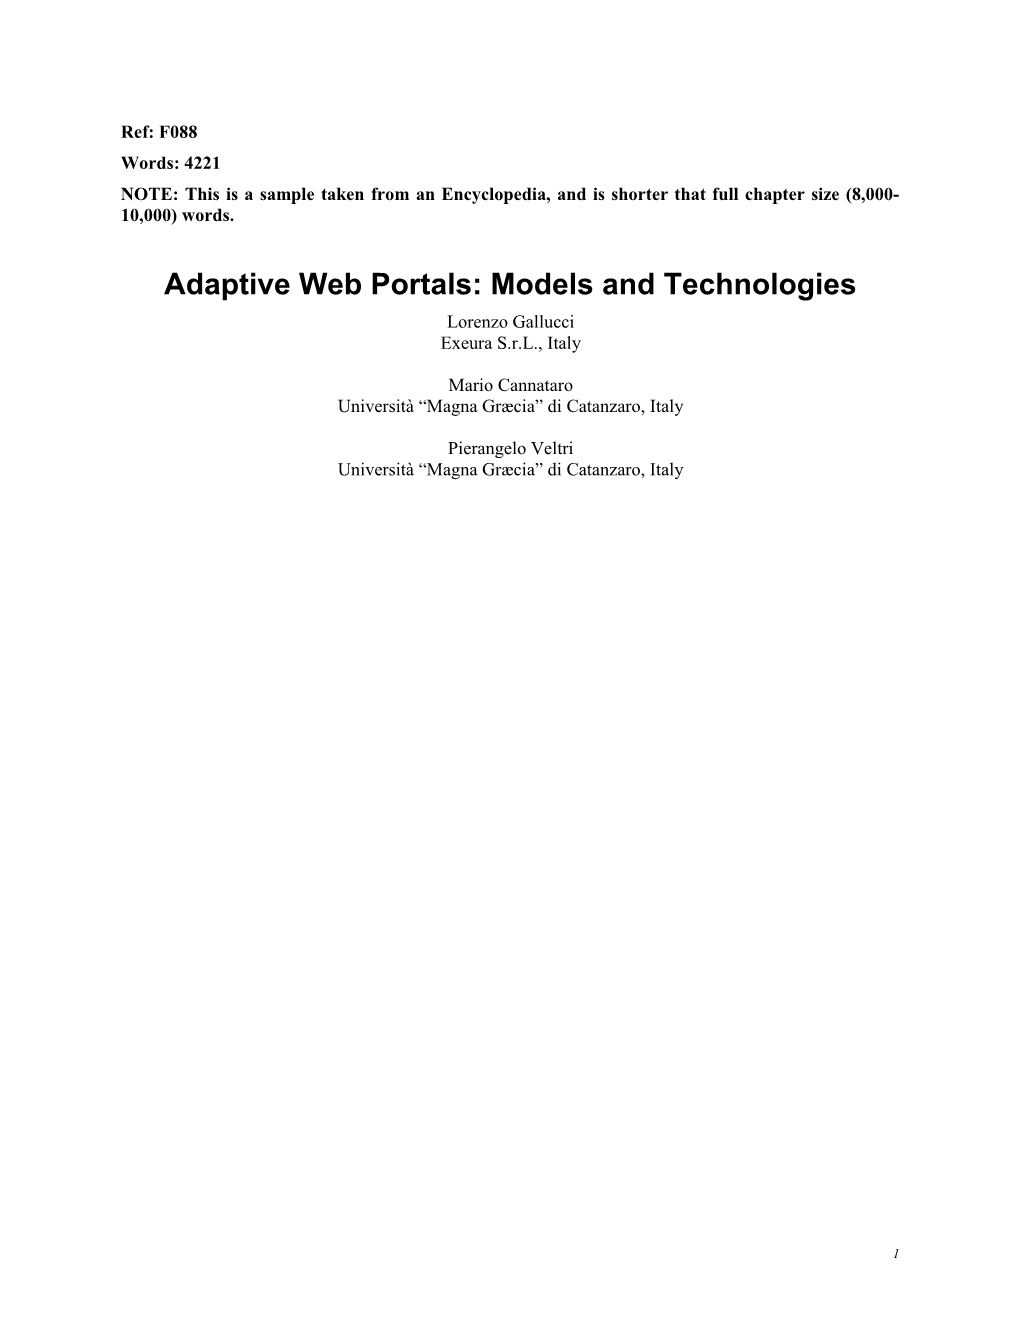 Adaptive Web Portals: Models and Technologies